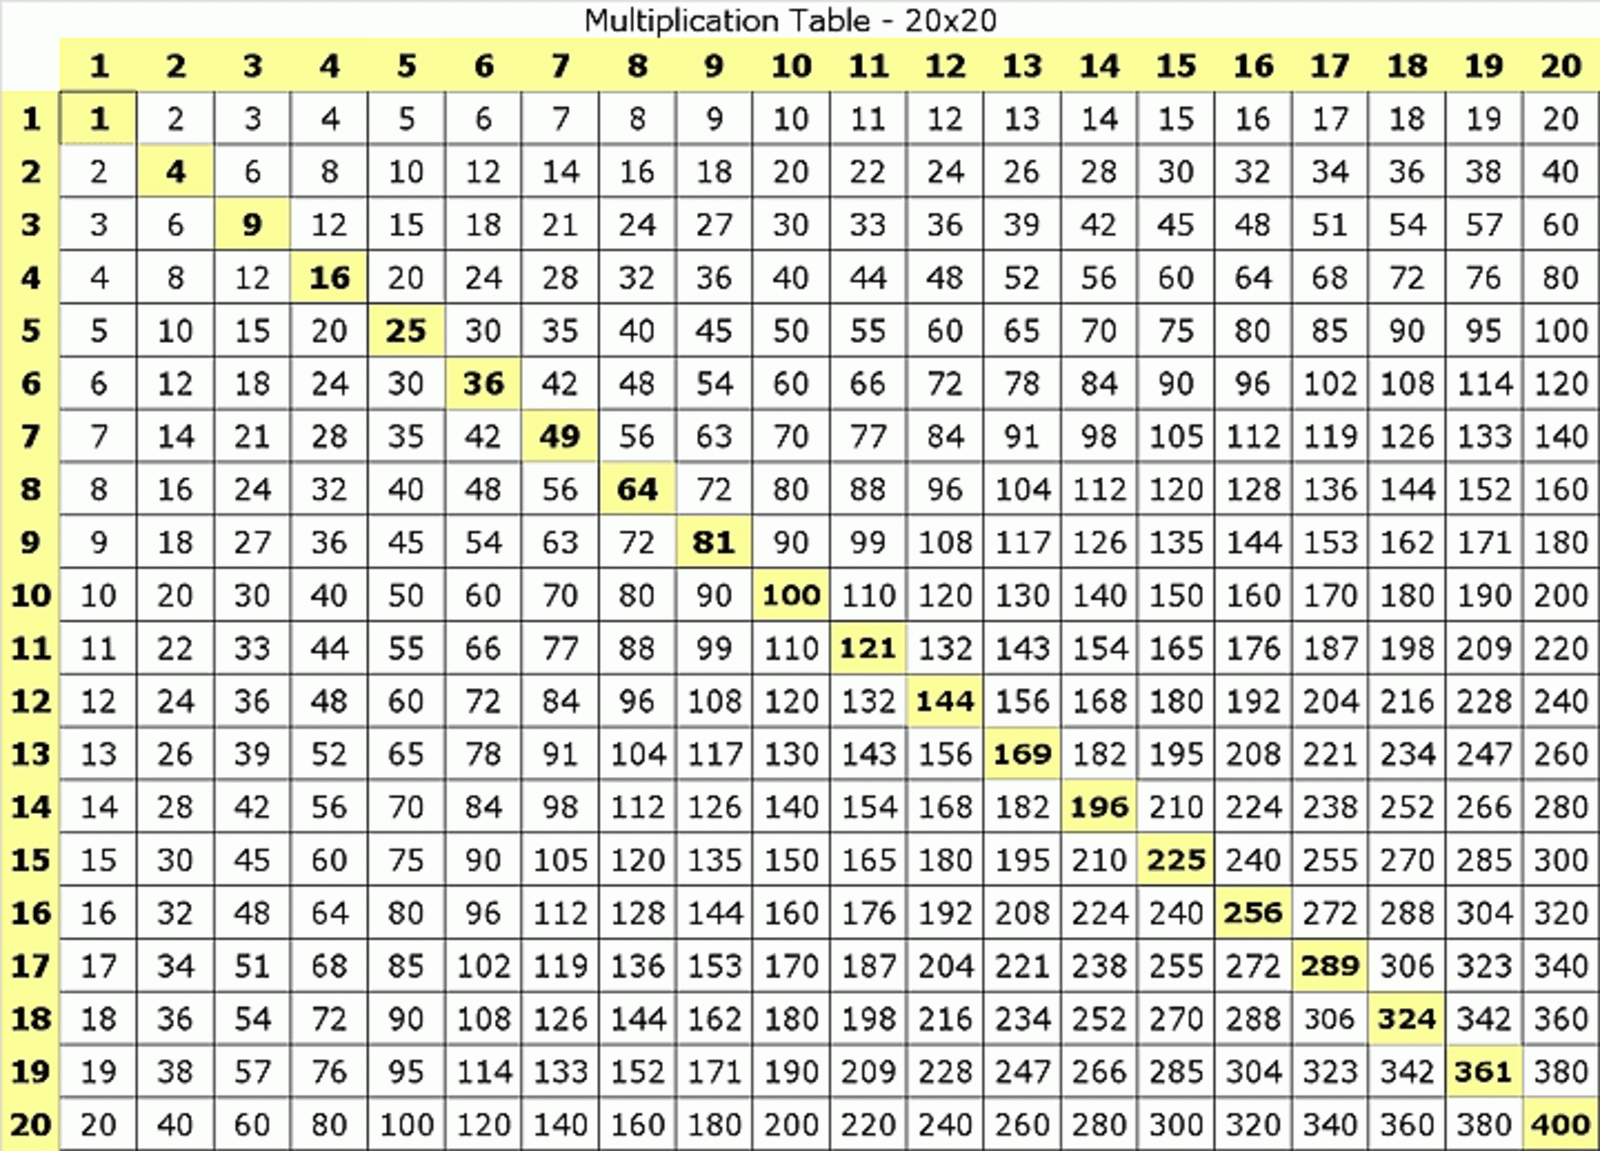 Ukuran Begel Kolom 15x15 Multiplication Table Blank Template - IMAGESEE